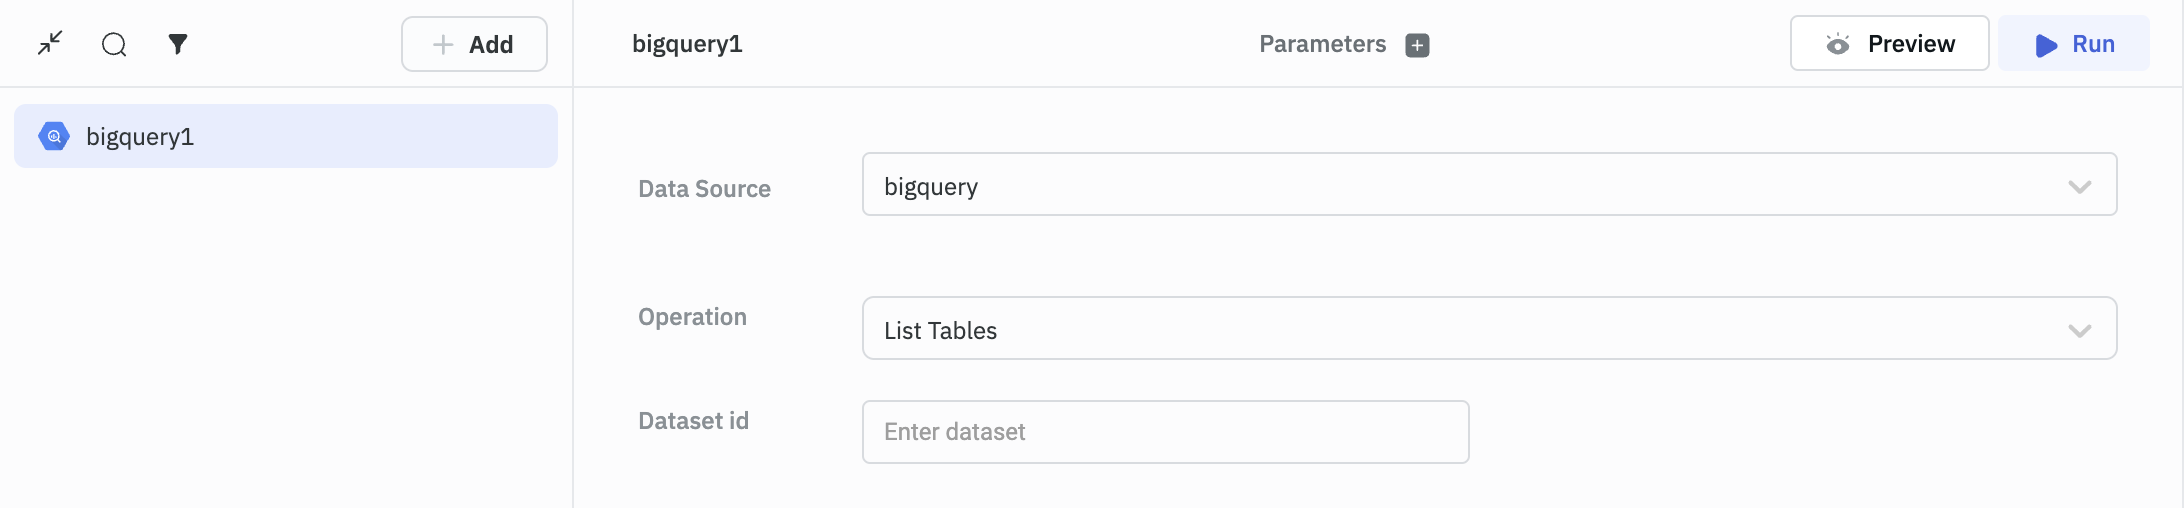 BQ list tables